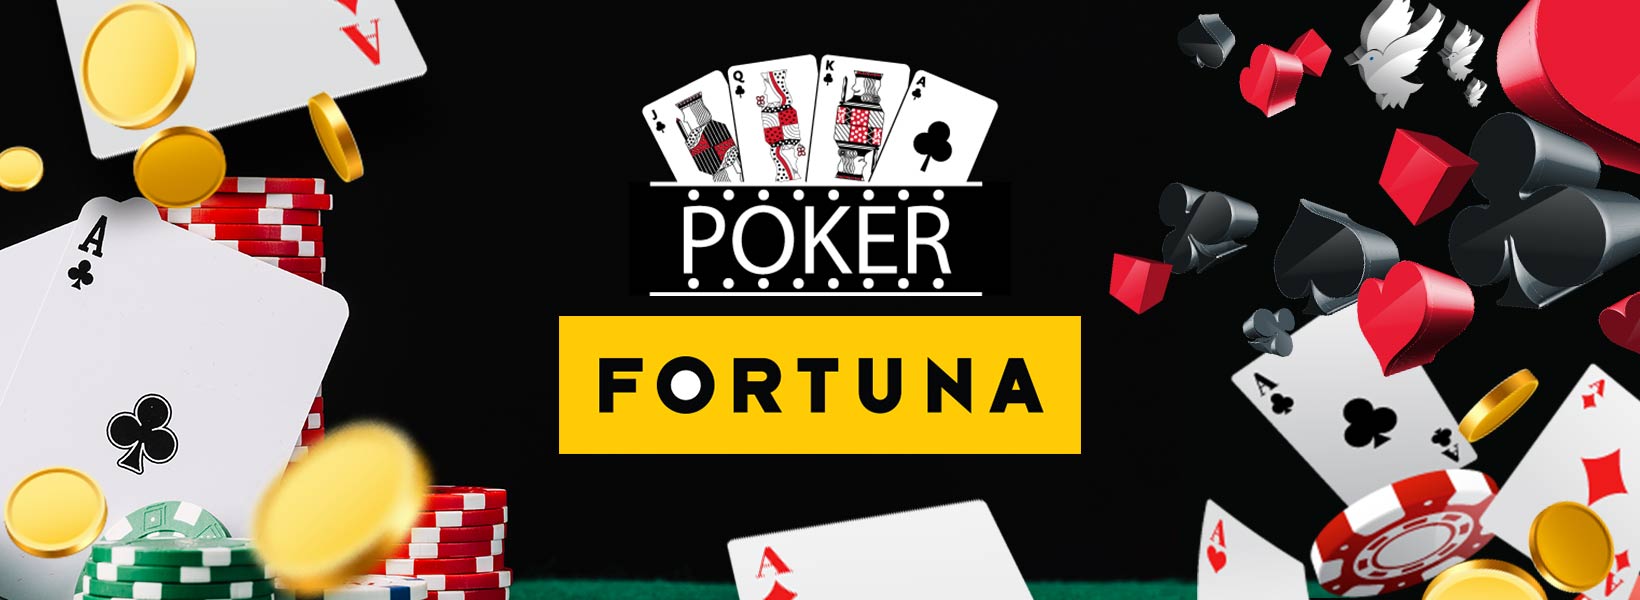 poker ca la aparate fortuna